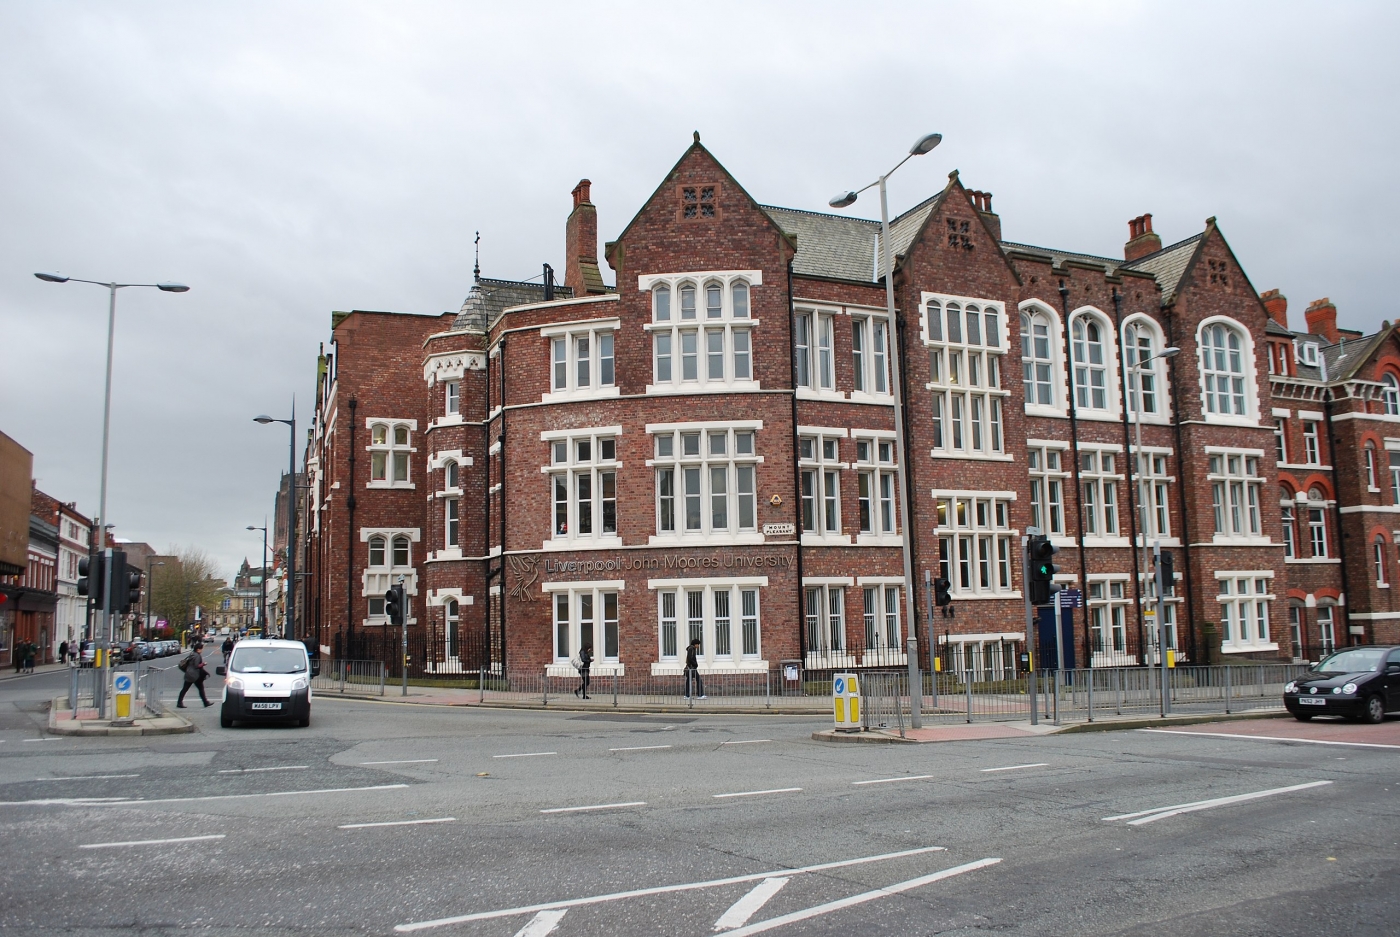 Liverpool John Moores University - Mount Pleasant Campus